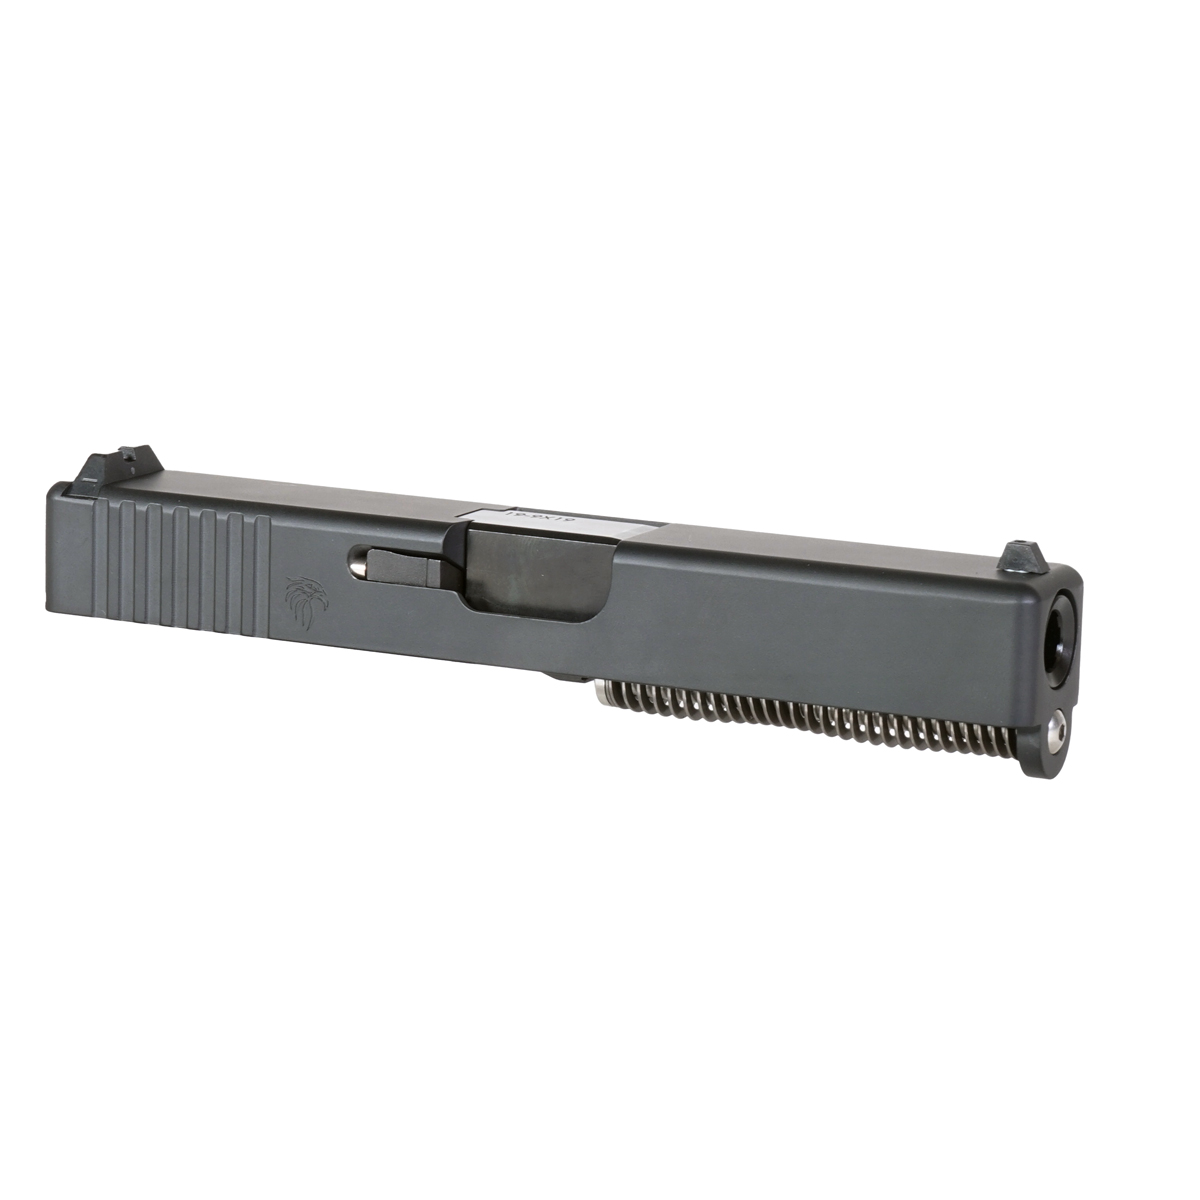 DTT 'Rona' 9mm Complete Slide Kit - Glock 19 Gen 1-3 Compatible